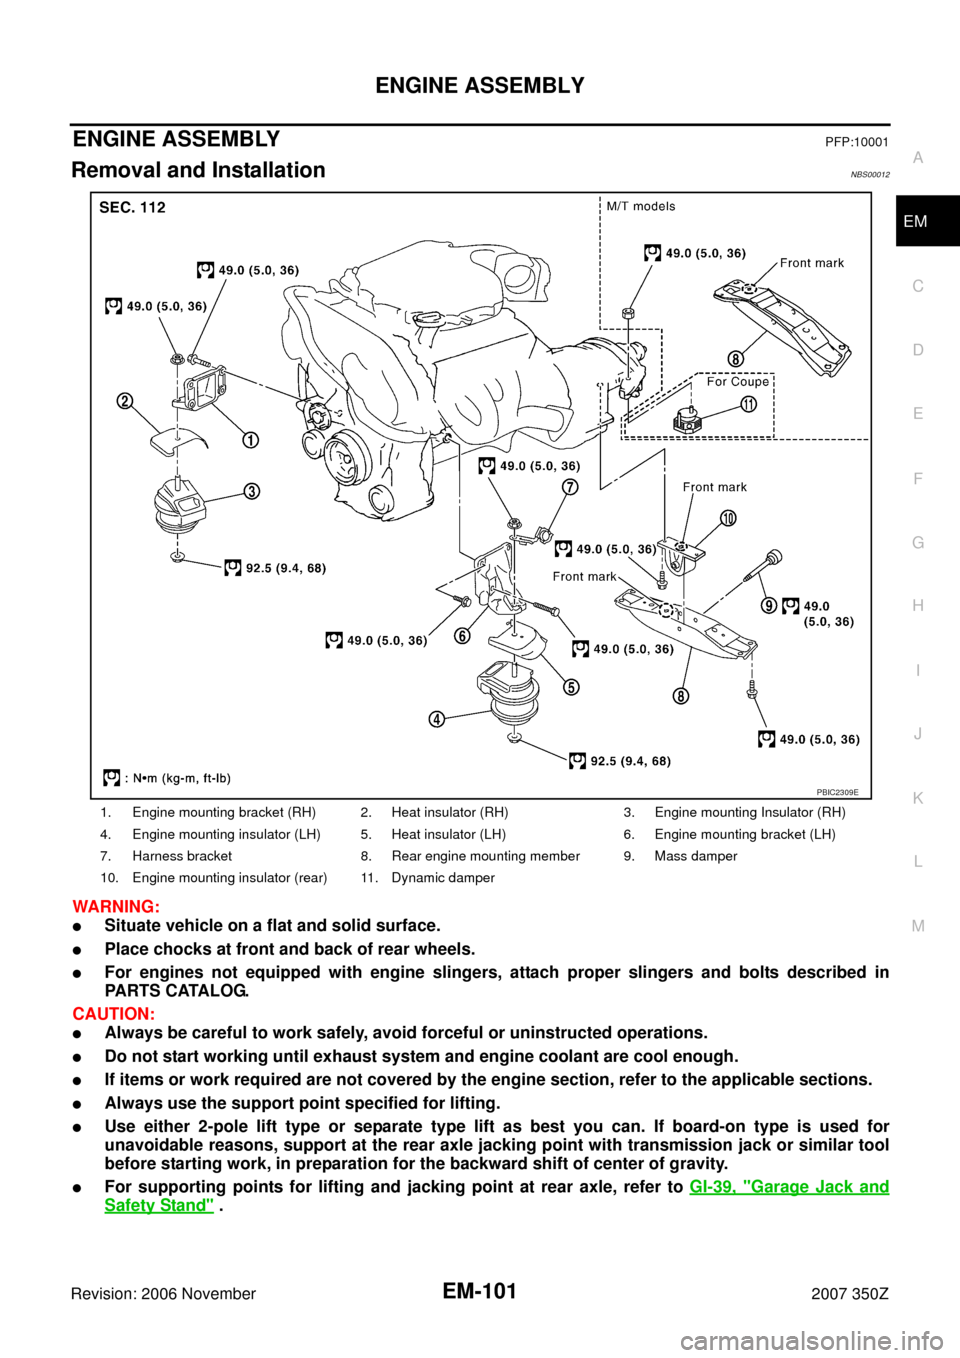 NISSAN 350Z 2007 Z33 Engine Mechanical Workshop Manual ENGINE ASSEMBLY
EM-101
C
D
E
F
G
H
I
J
K
L
MA
EM
Revision: 2006 November2007 350Z
ENGINE ASSEMBLYPFP:10001
Removal and InstallationNBS00012
WARNING:
Situate vehicle on a flat and solid surface.
Plac